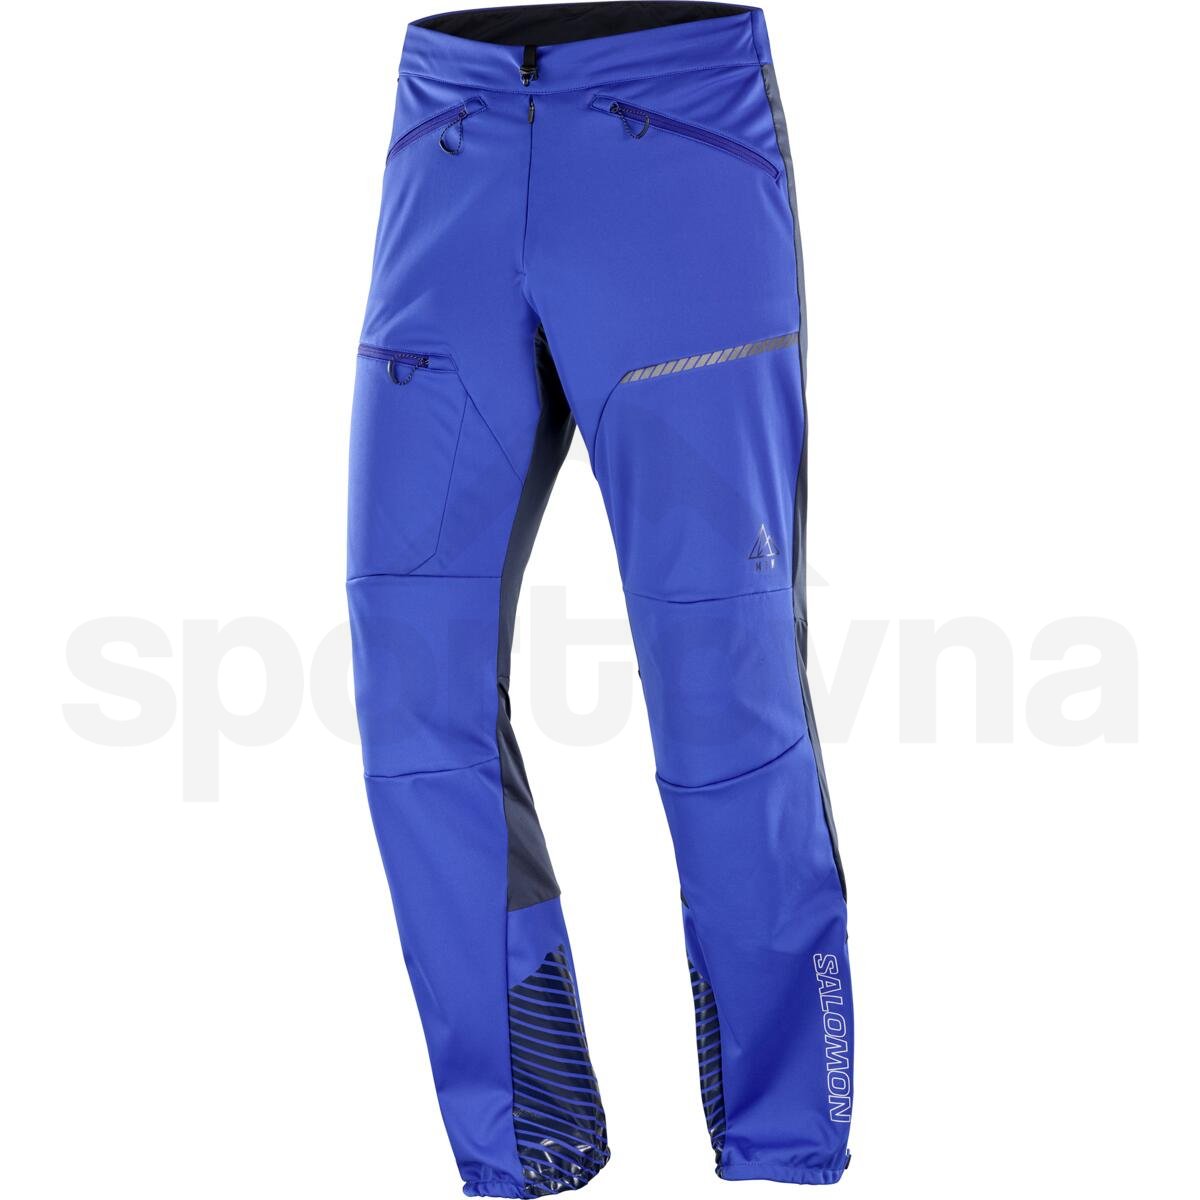 Kalhoty Salomon Mtn Softshell Pant M - modrá/černá